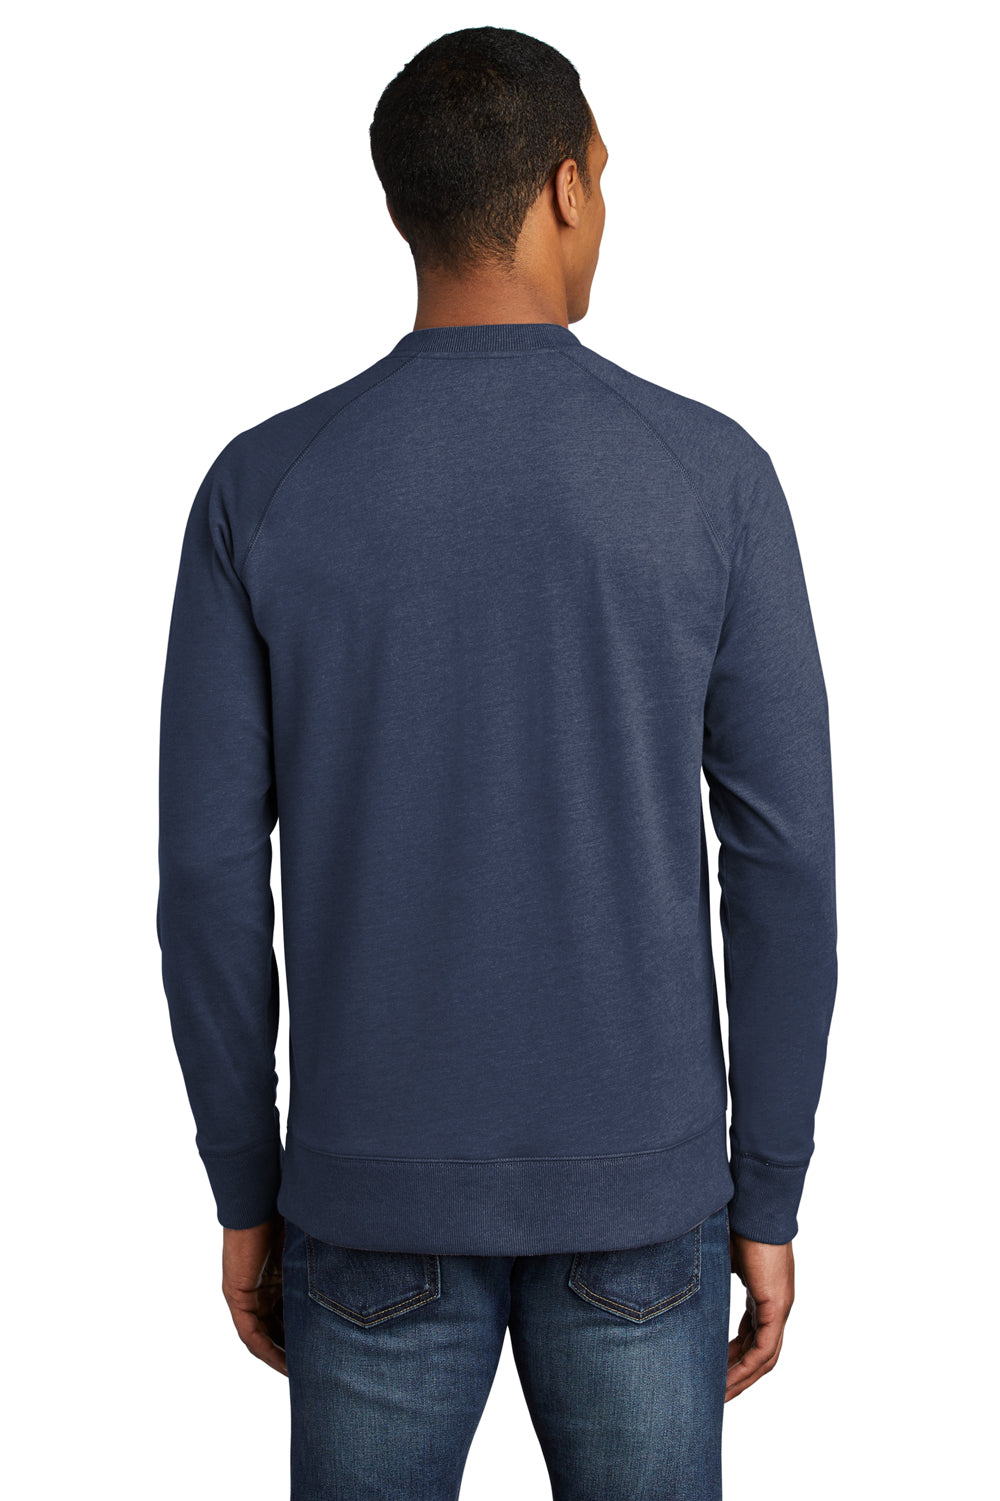 New Era Mens Sueded 1/4 Zip Sweatshirt Heather True Navy Blue Side